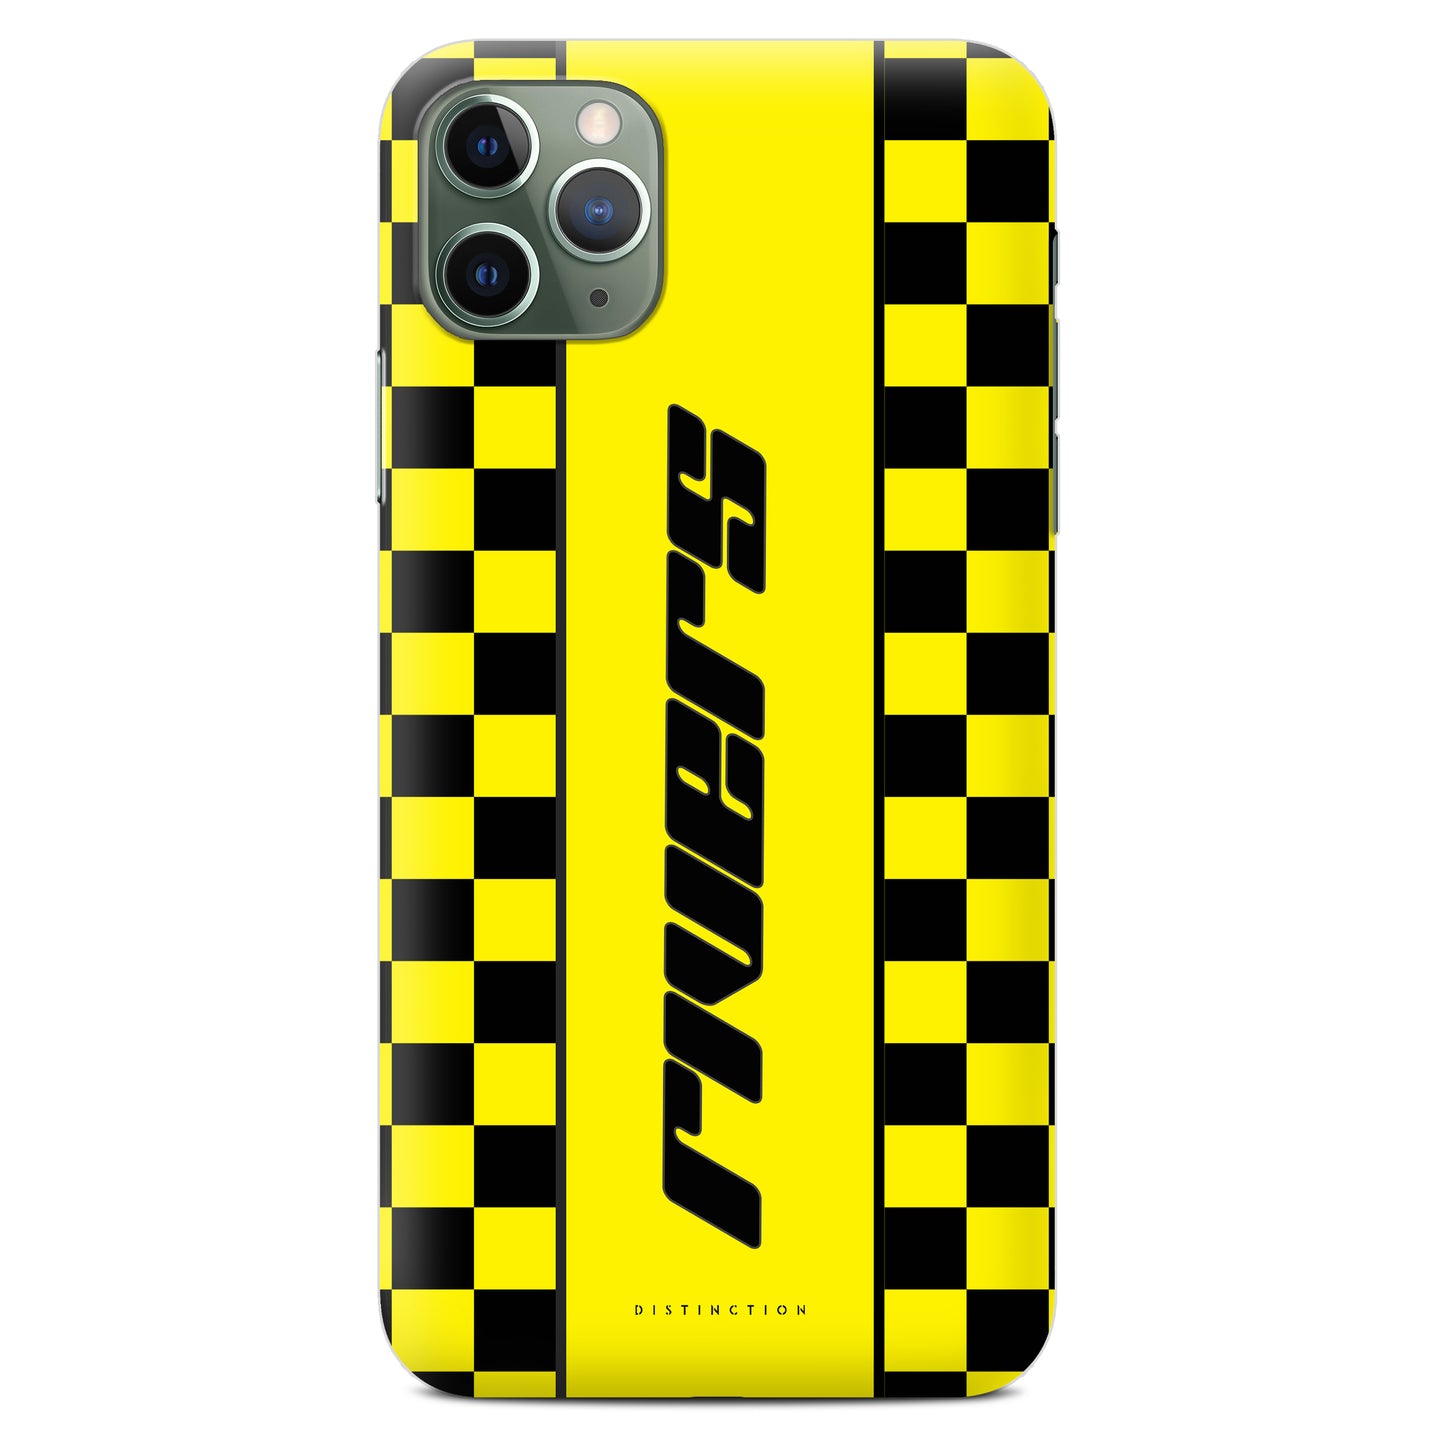 Personalised Phone Case - Checker Yellow